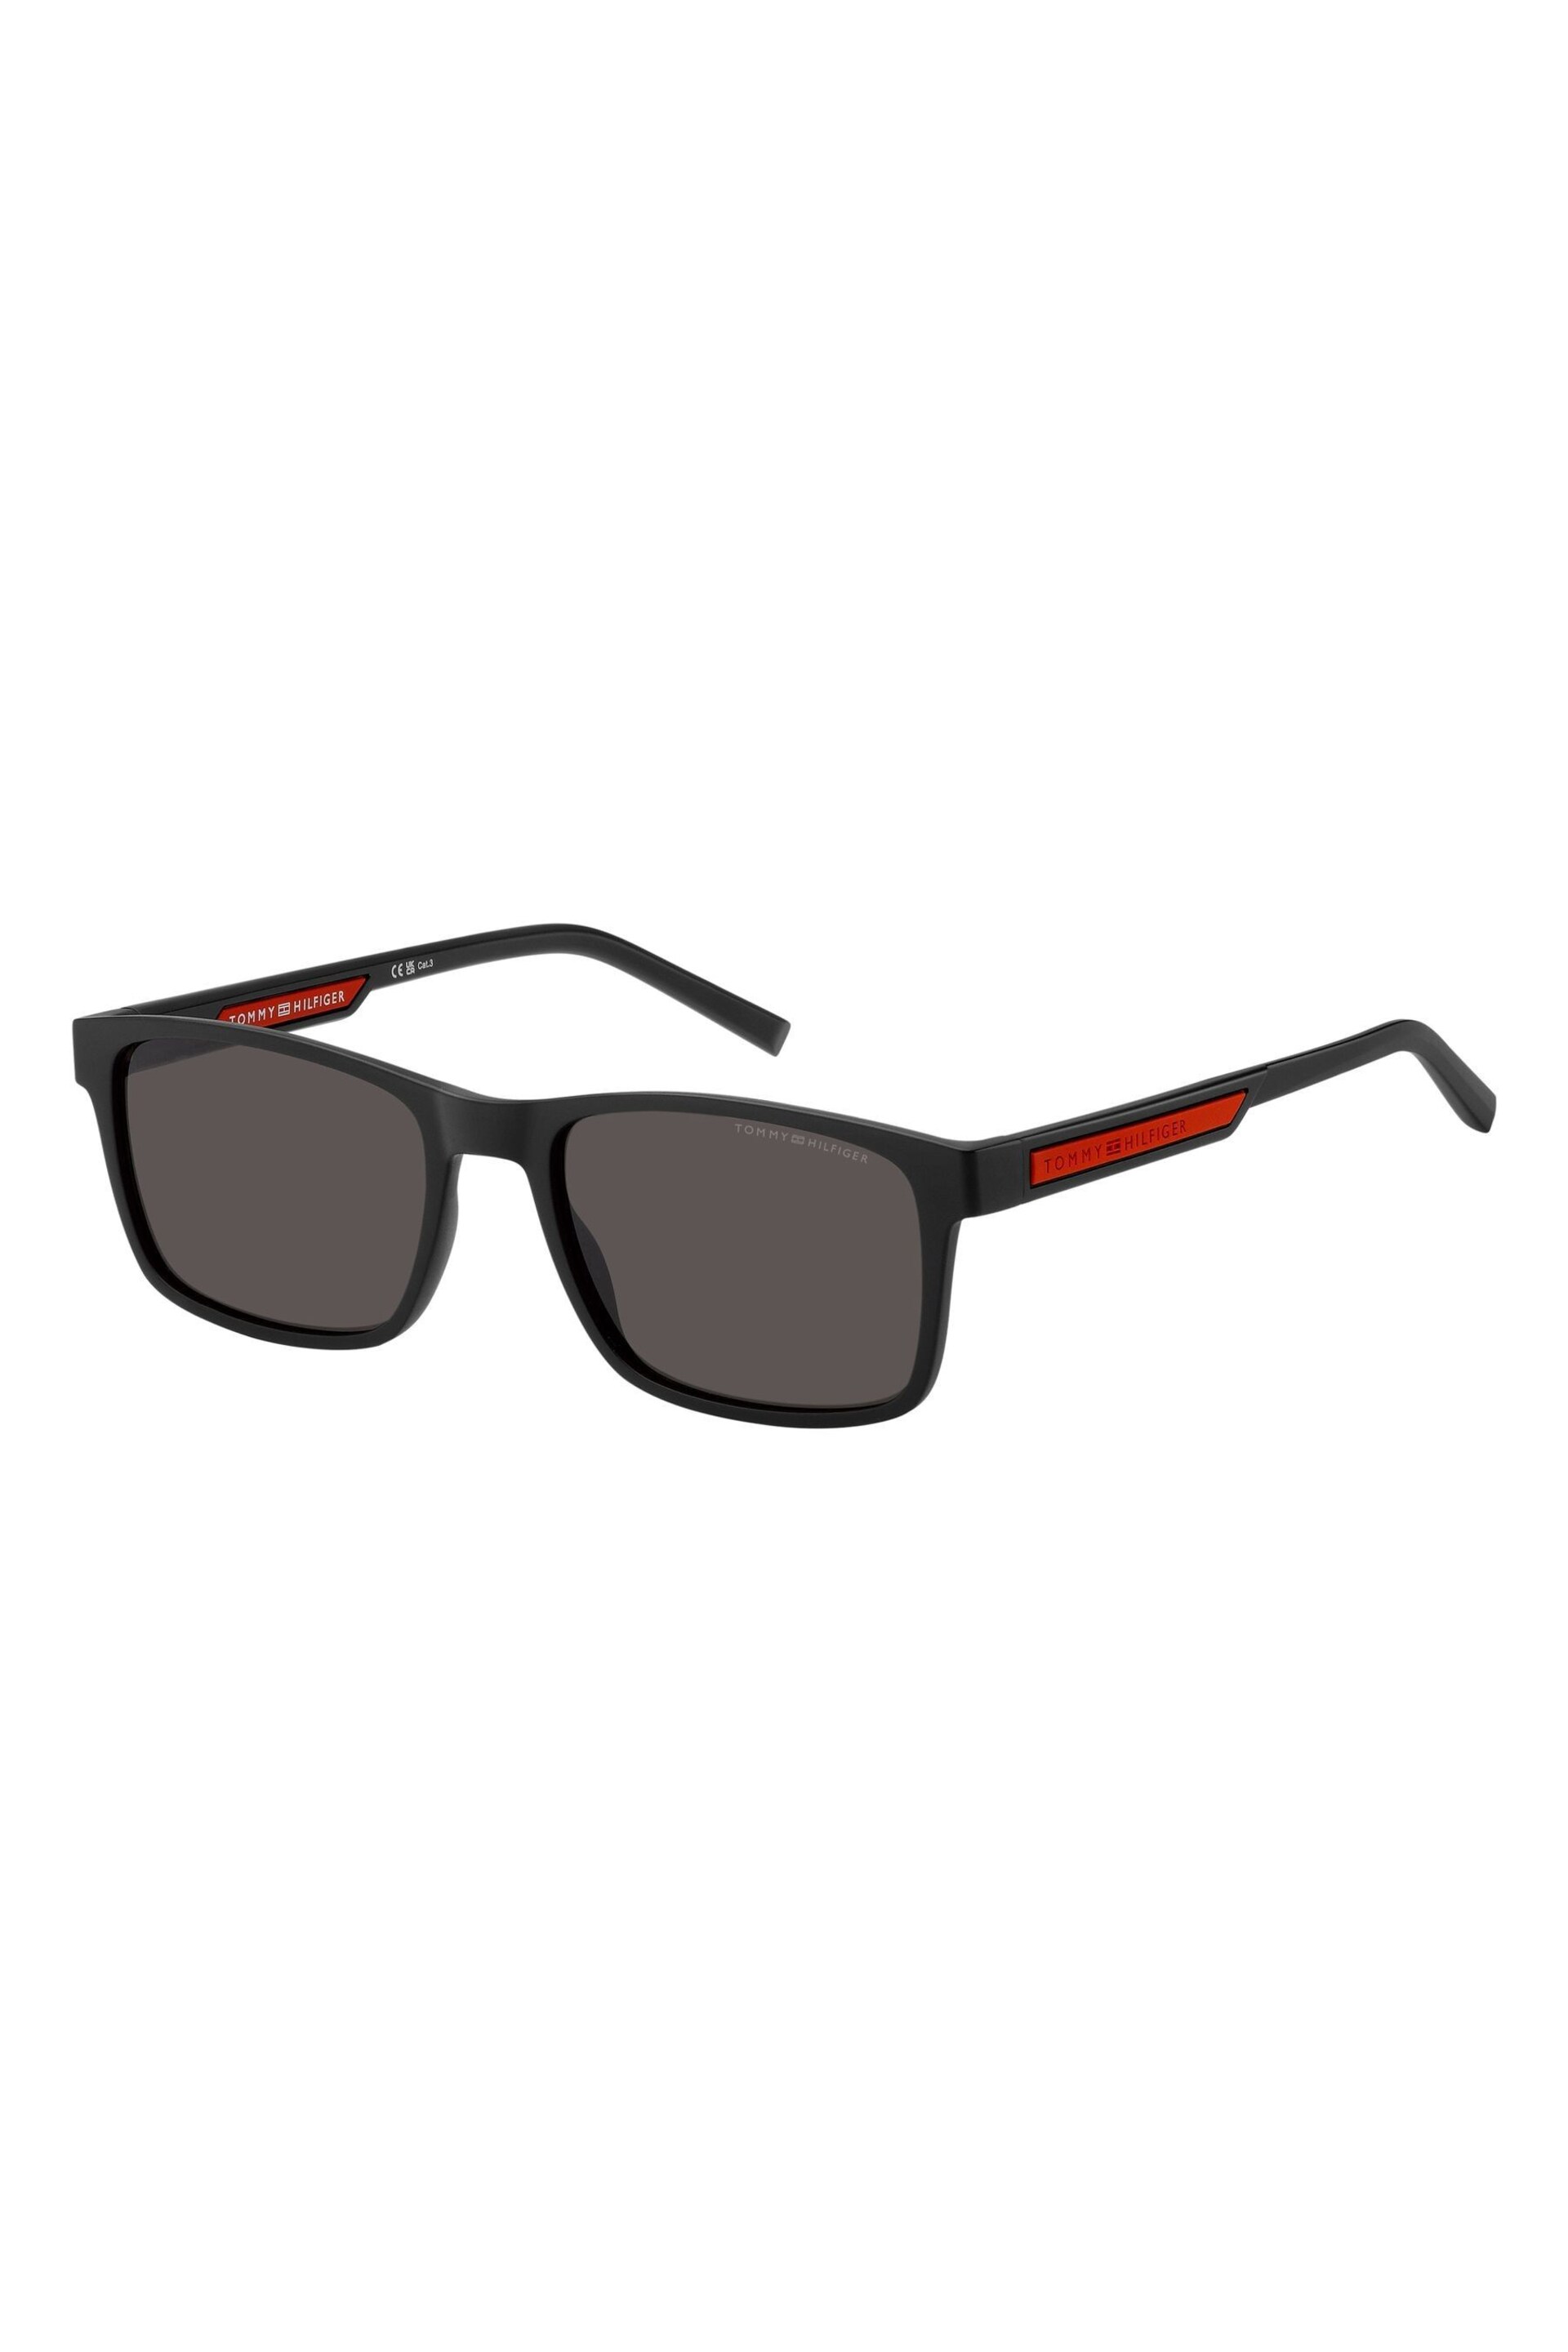 Tommy Hilfiger 2089/S Rectangular Black Sunglasses - Image 1 of 4